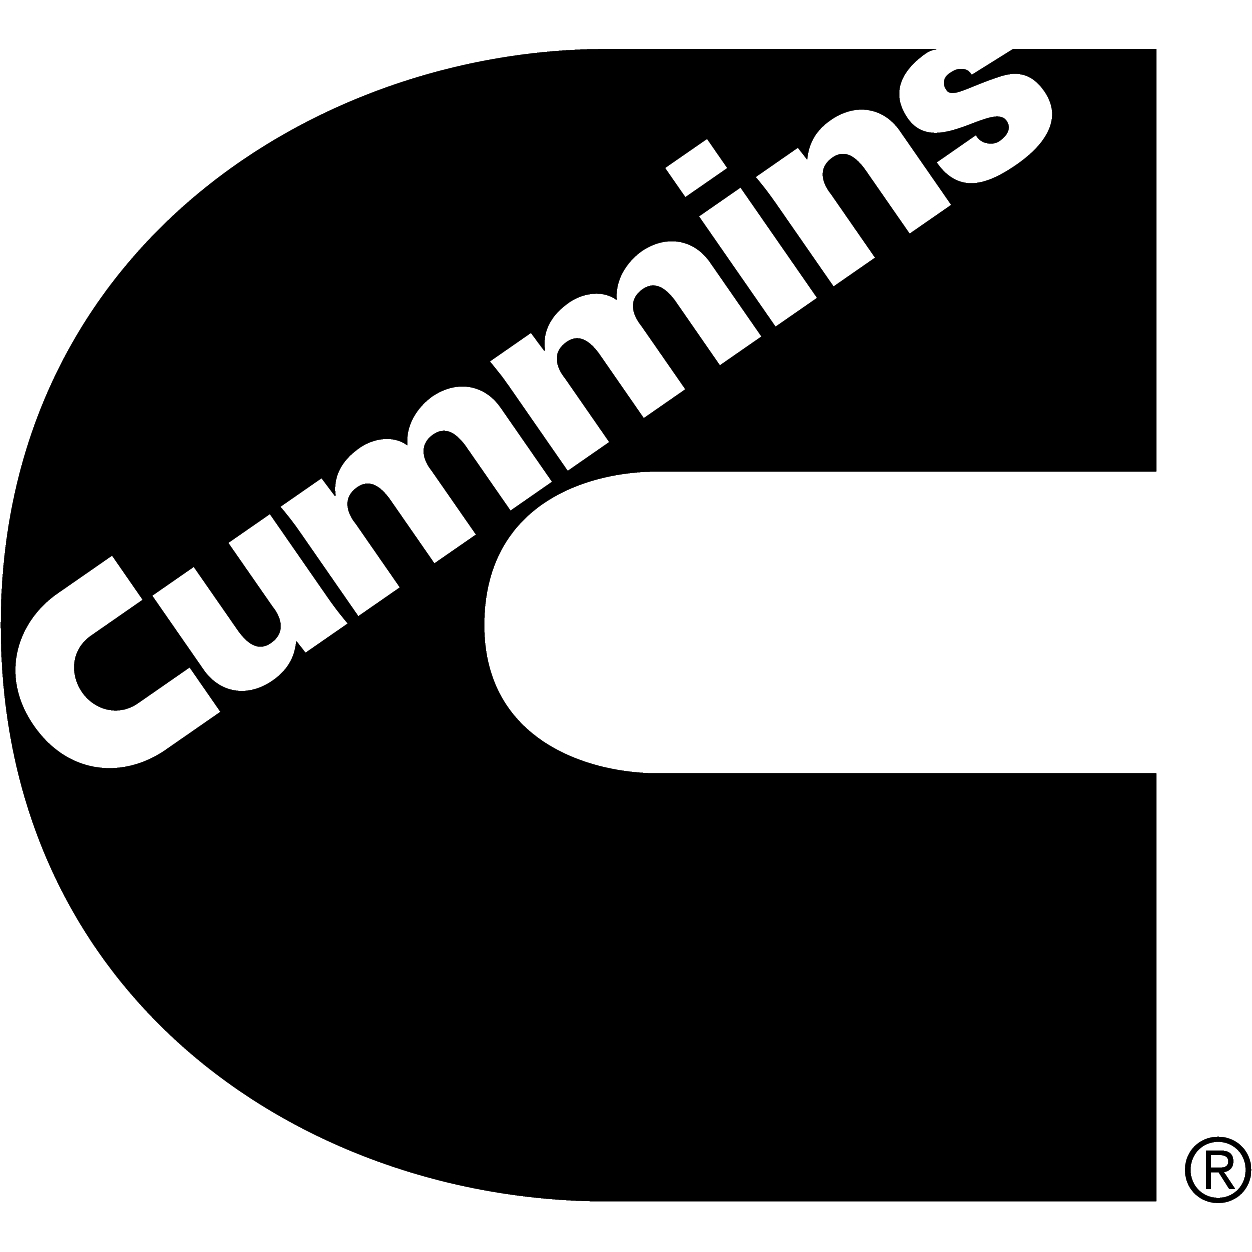 Cummins Sales and Service - Moteurs diesels